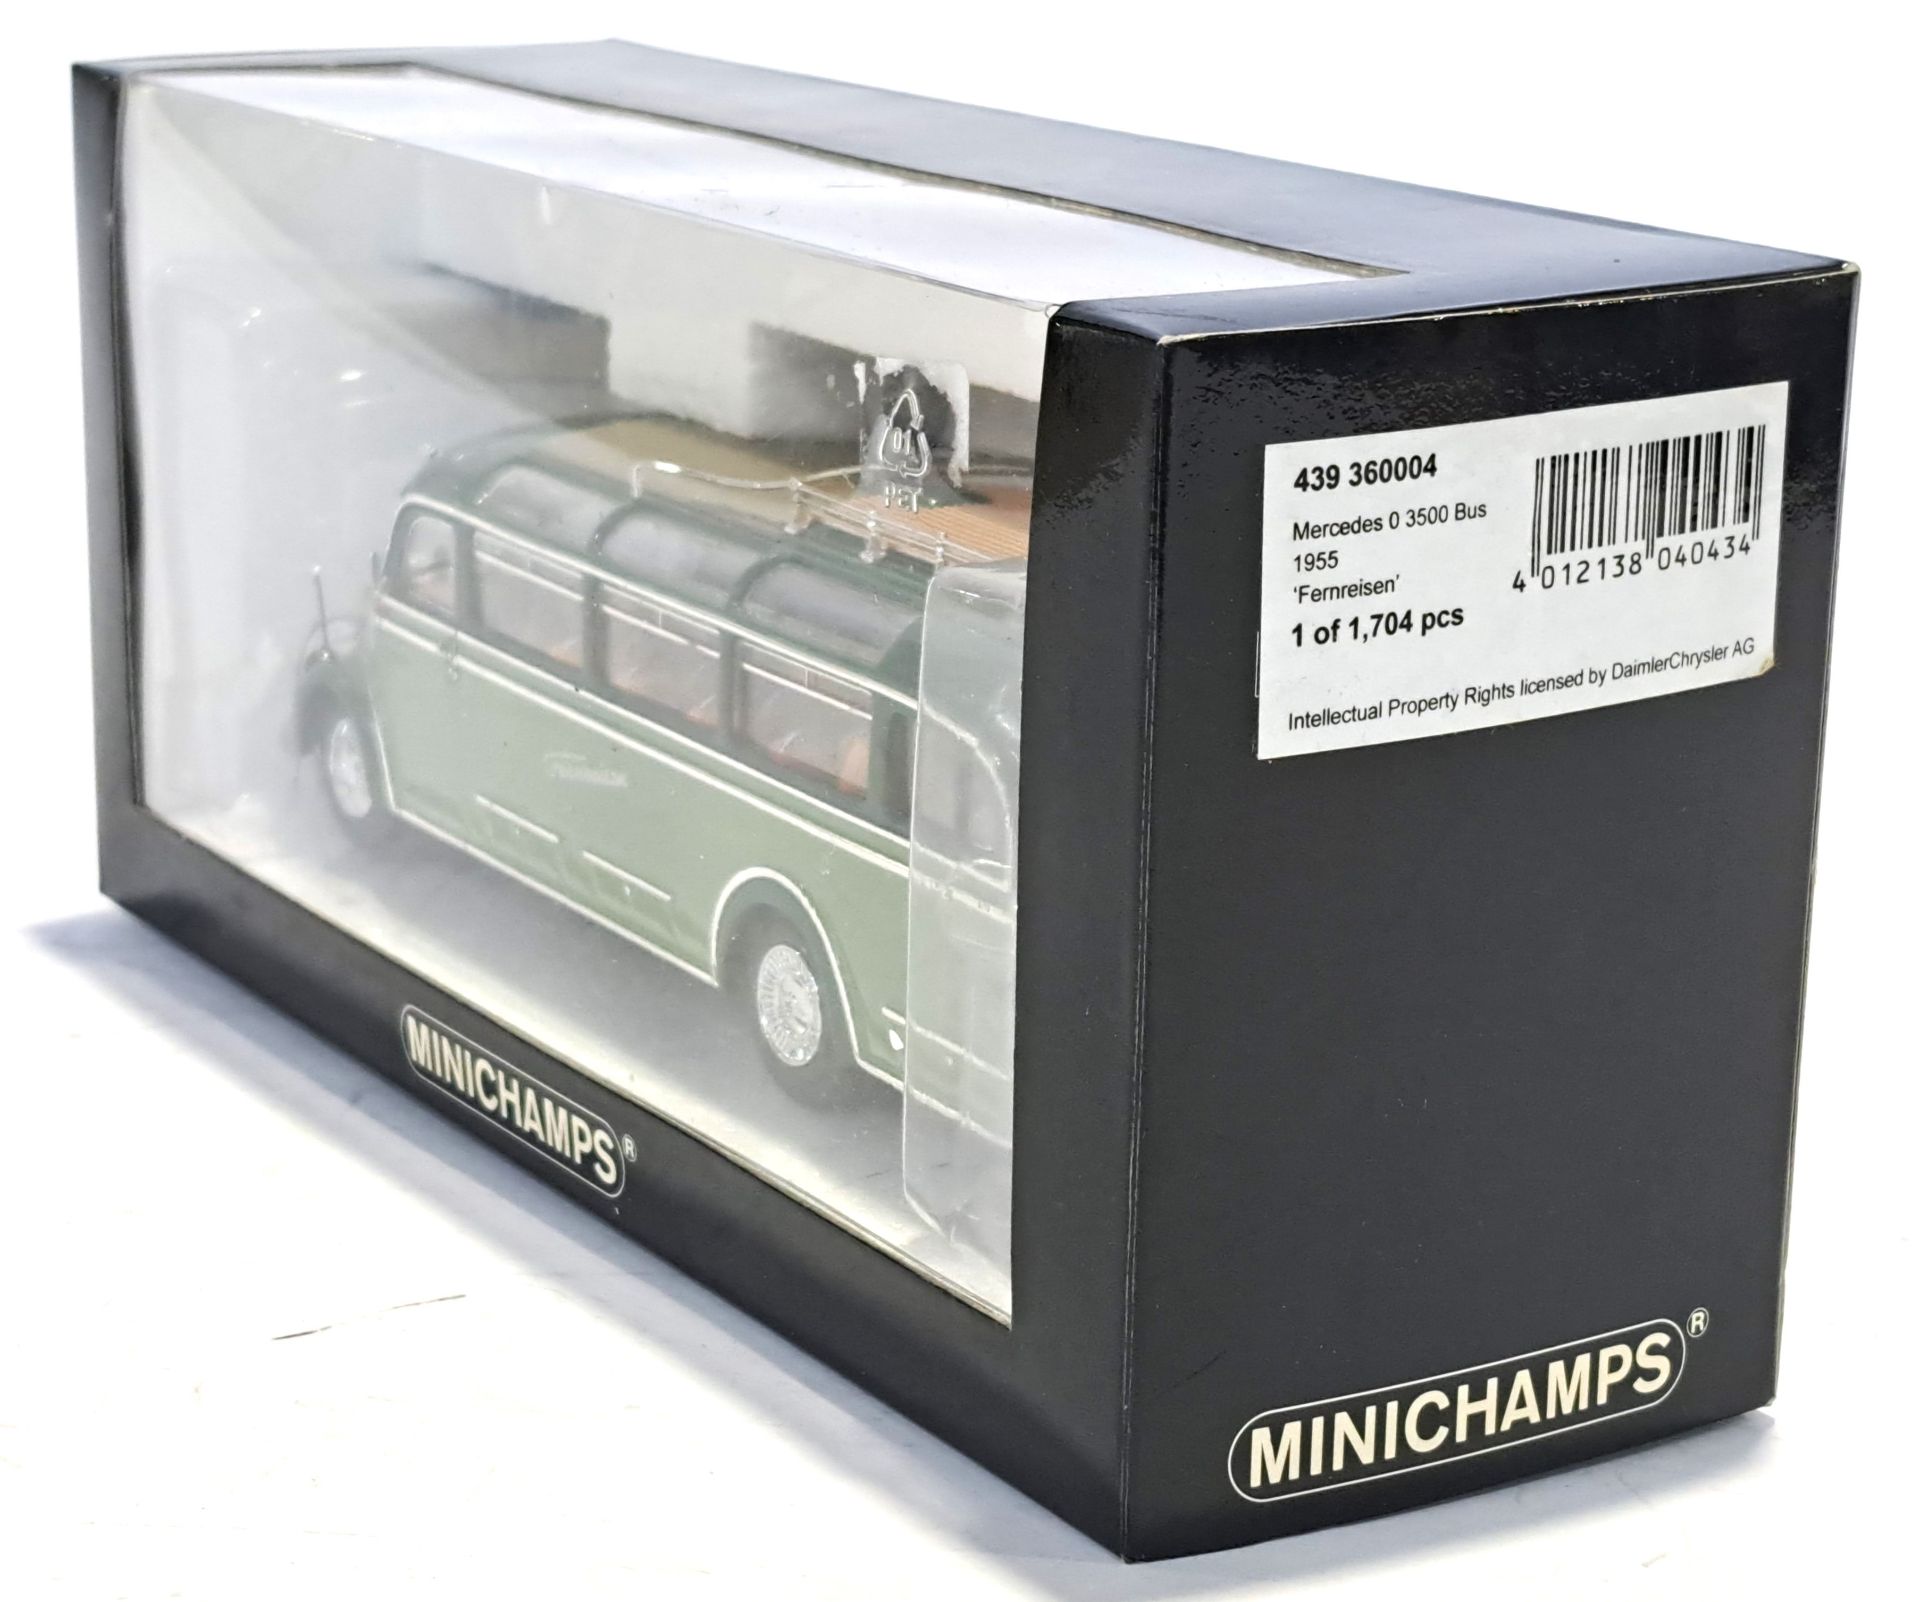 Minichamps Mercedes 0 3500 Bus 1955 "Fernreisen" - Image 2 of 2